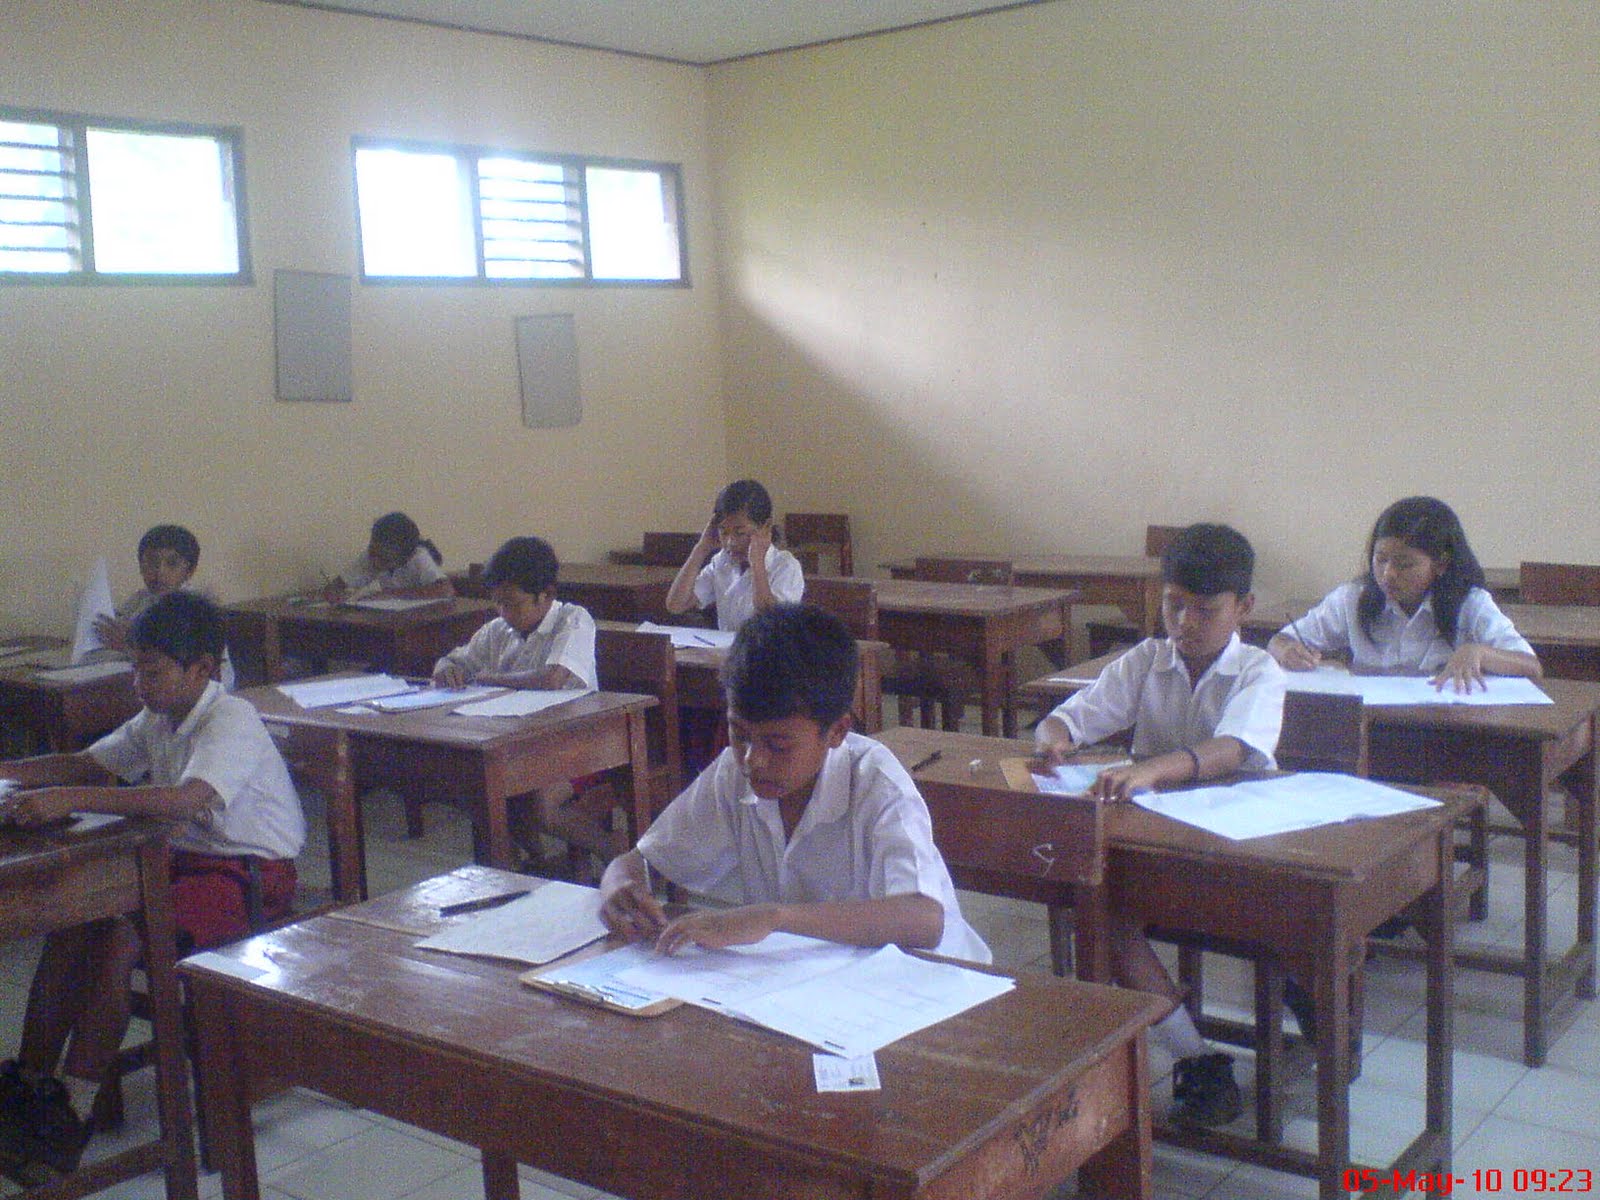 Pengumuman Hasil Ujian Nasional Sd Jakarta 2012